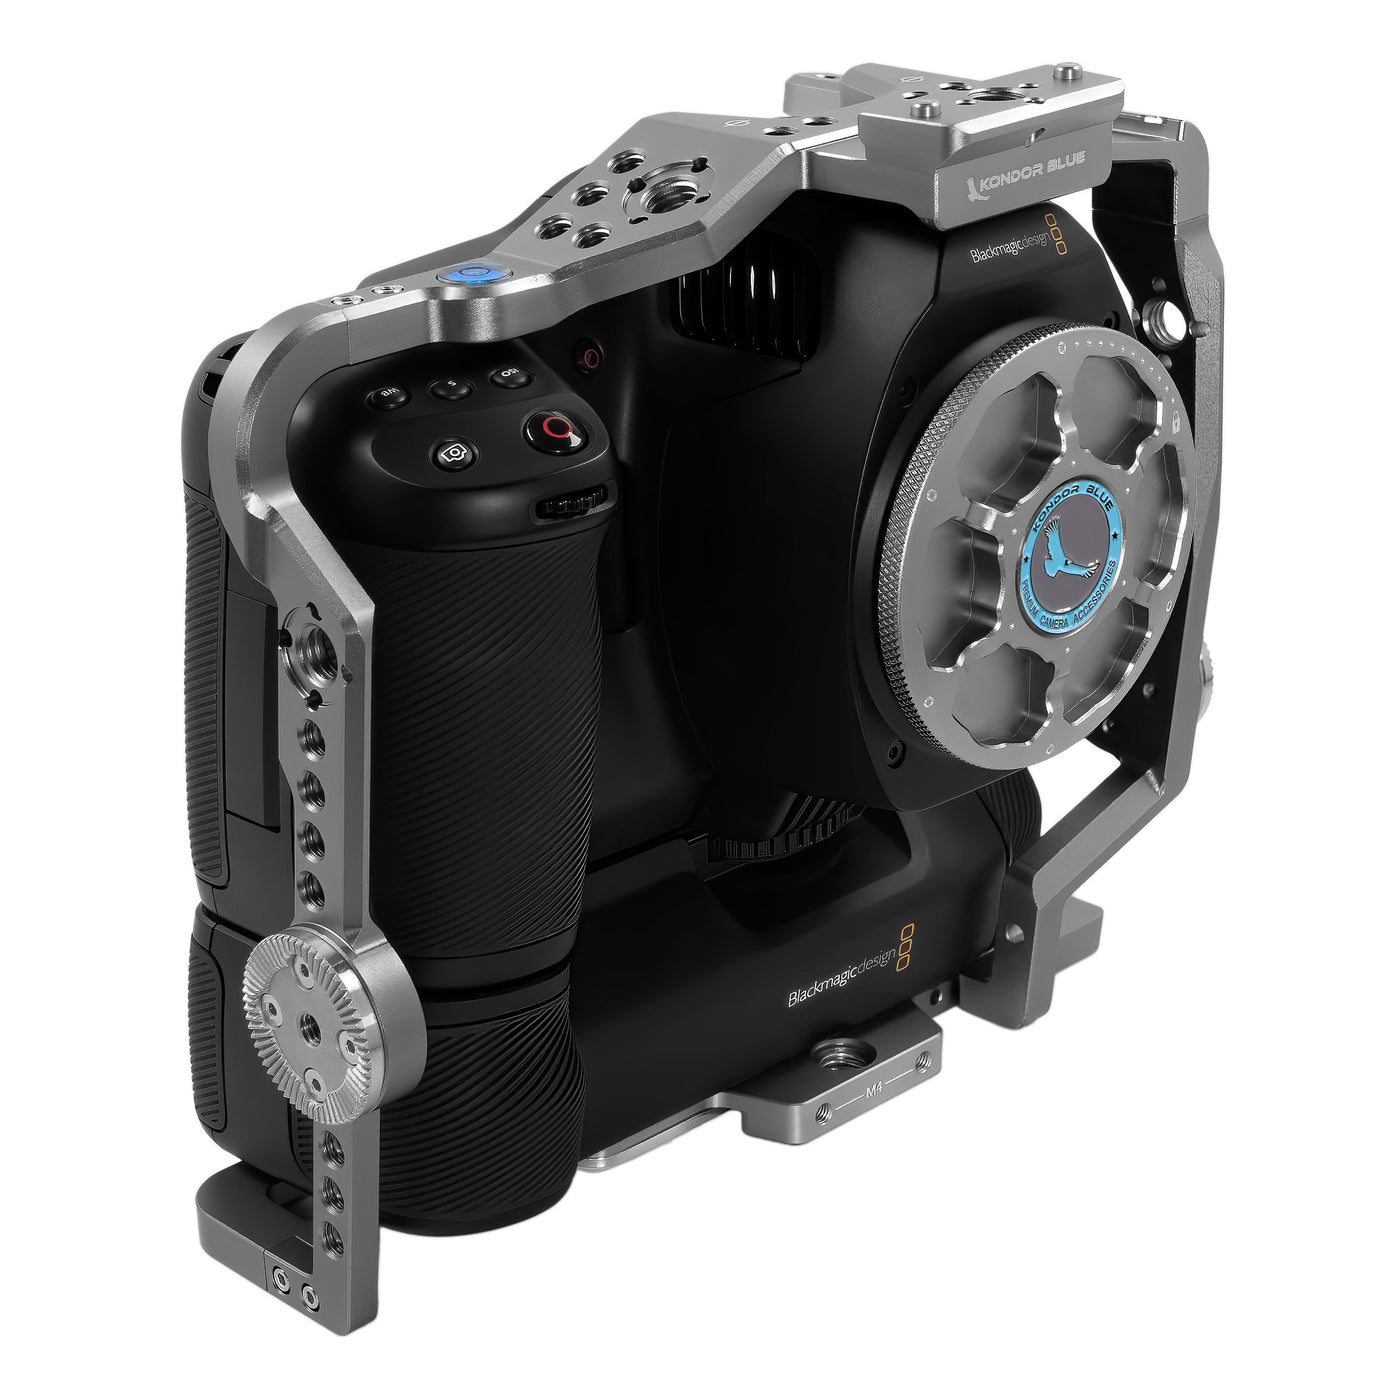  MAGICRIG BMPCC 6K Pro Cage with Top Handle Grip for Blackmagic  Design Pocket Cinema Camera 6K Pro : Electronics